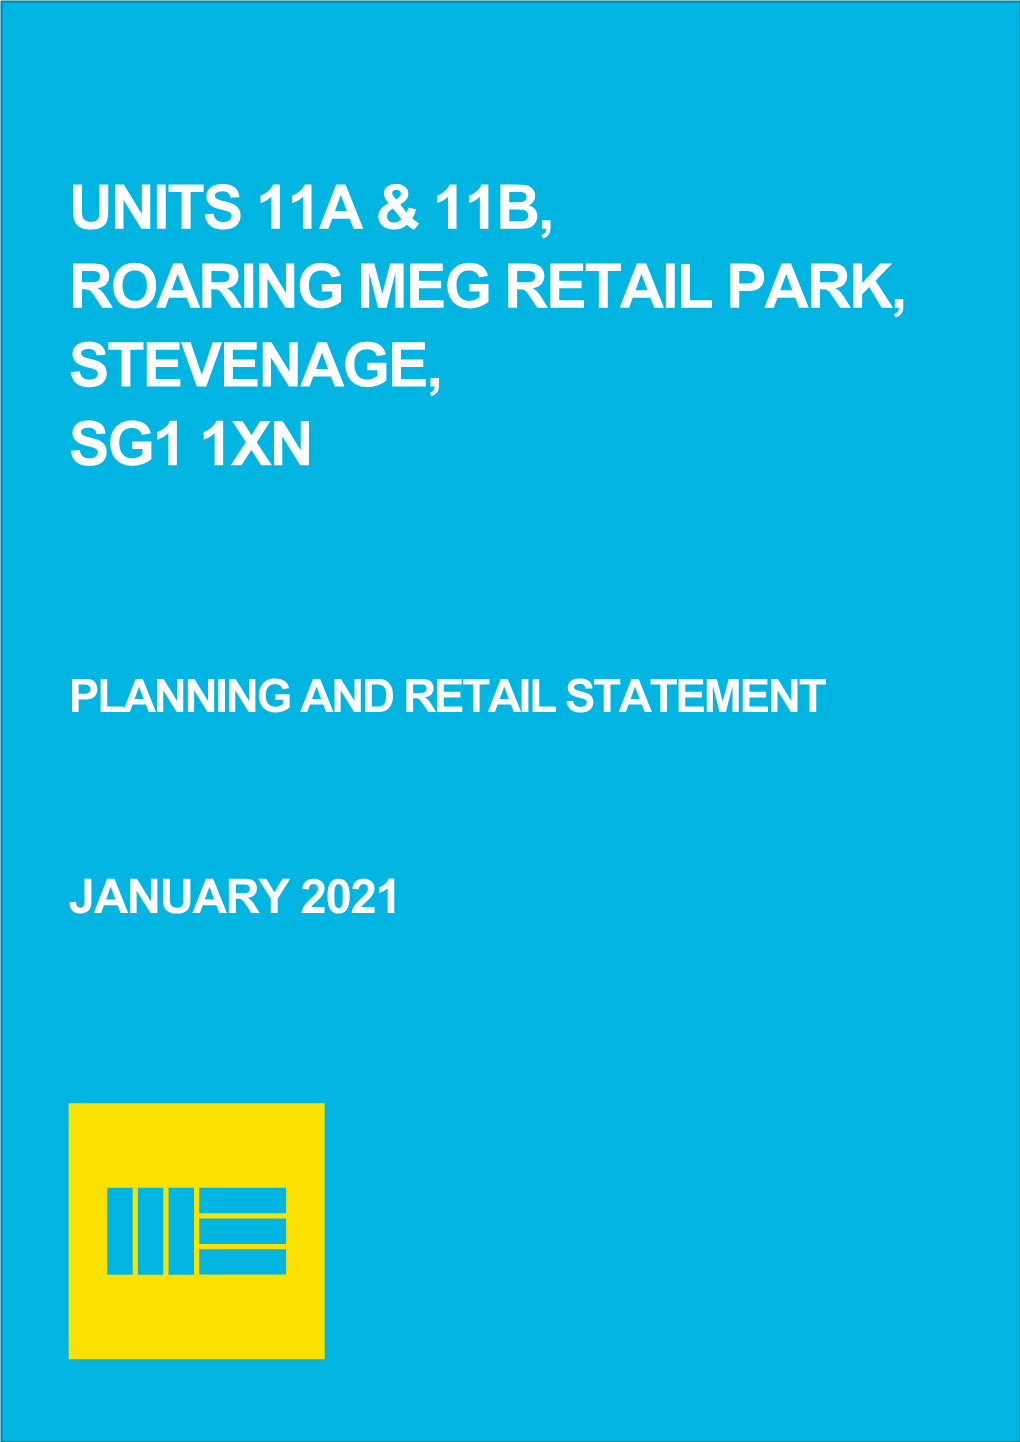 Units 11A & 11B, Roaring Meg Retail Park, Stevenage, Sg1